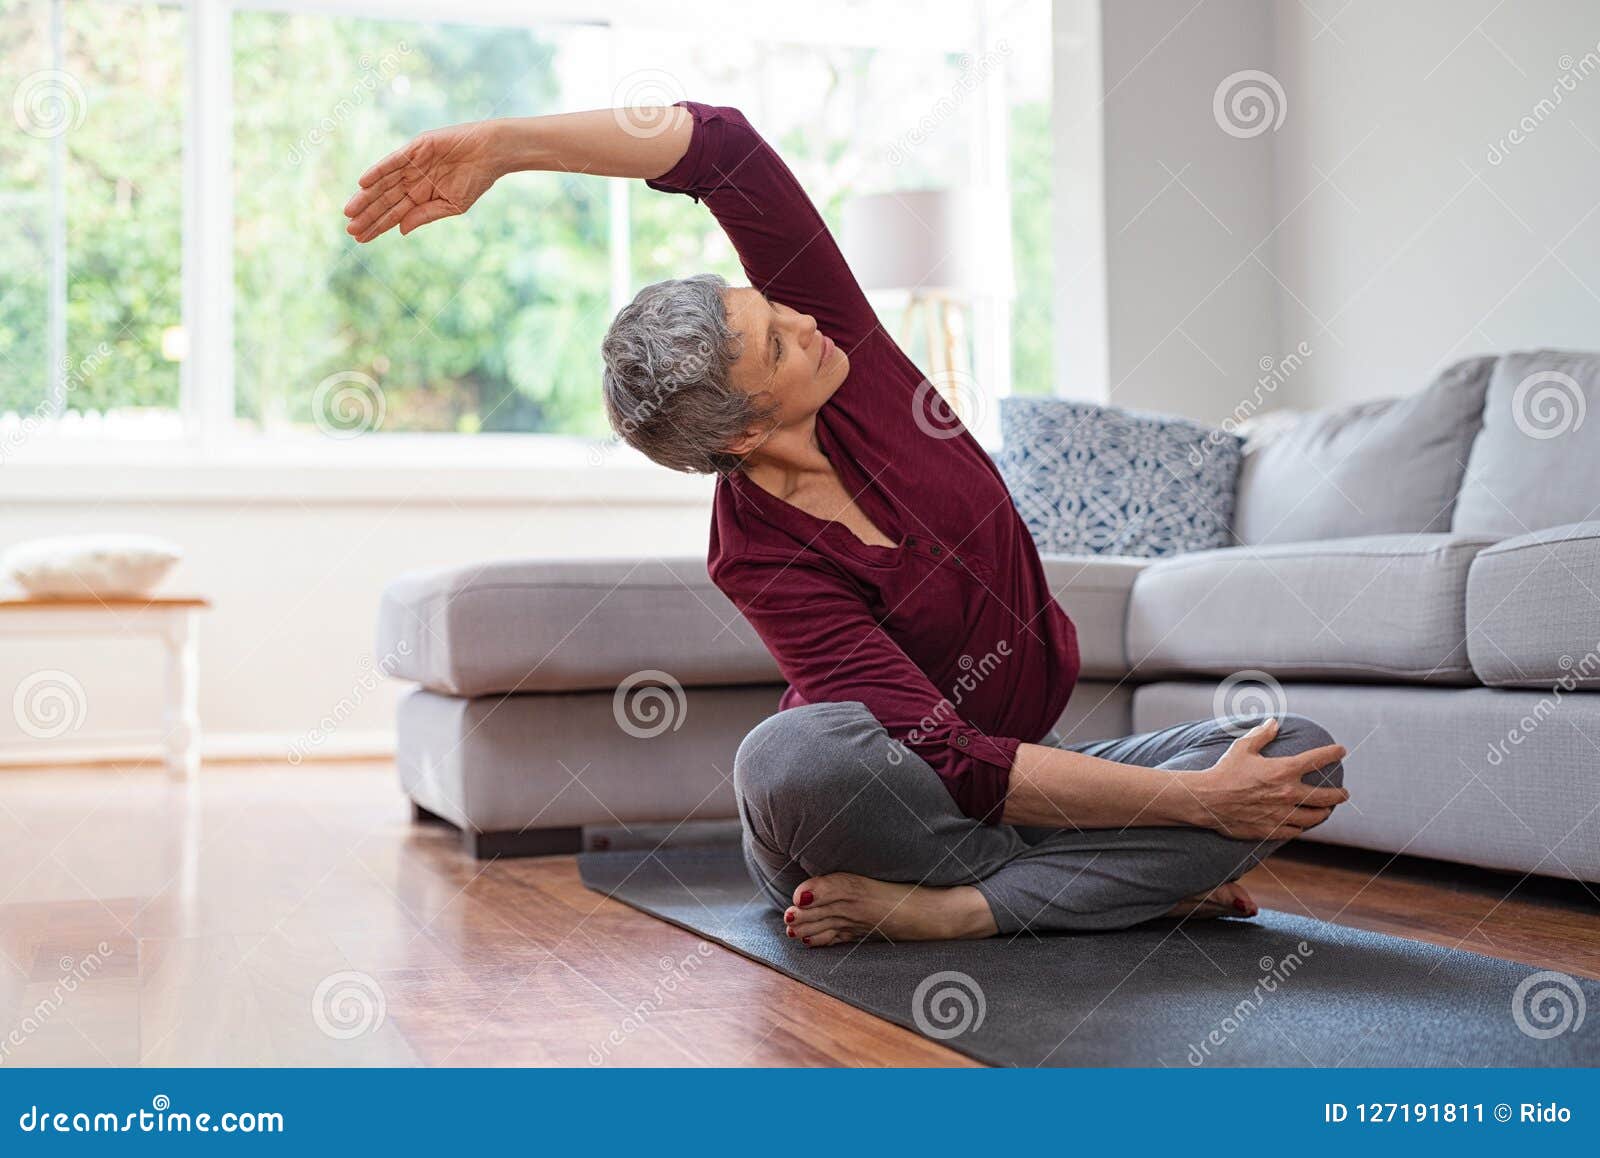 mature woman in yoga pose